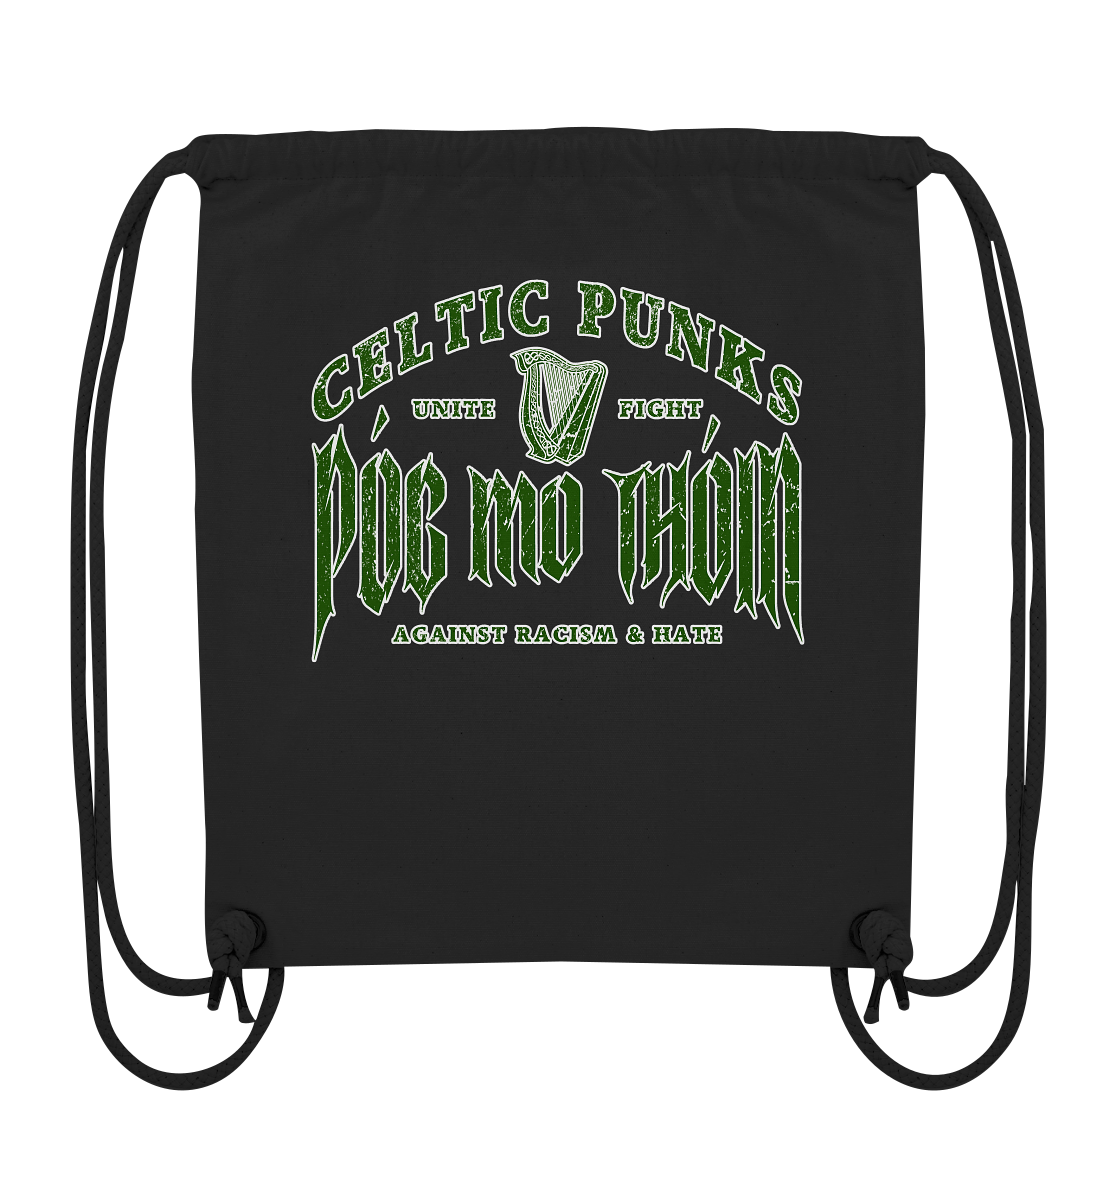 Póg Mo Thóin Streetwear "Celtic Punks Against Racism & Hate / Unite & Fight" - Organic Gym-Bag